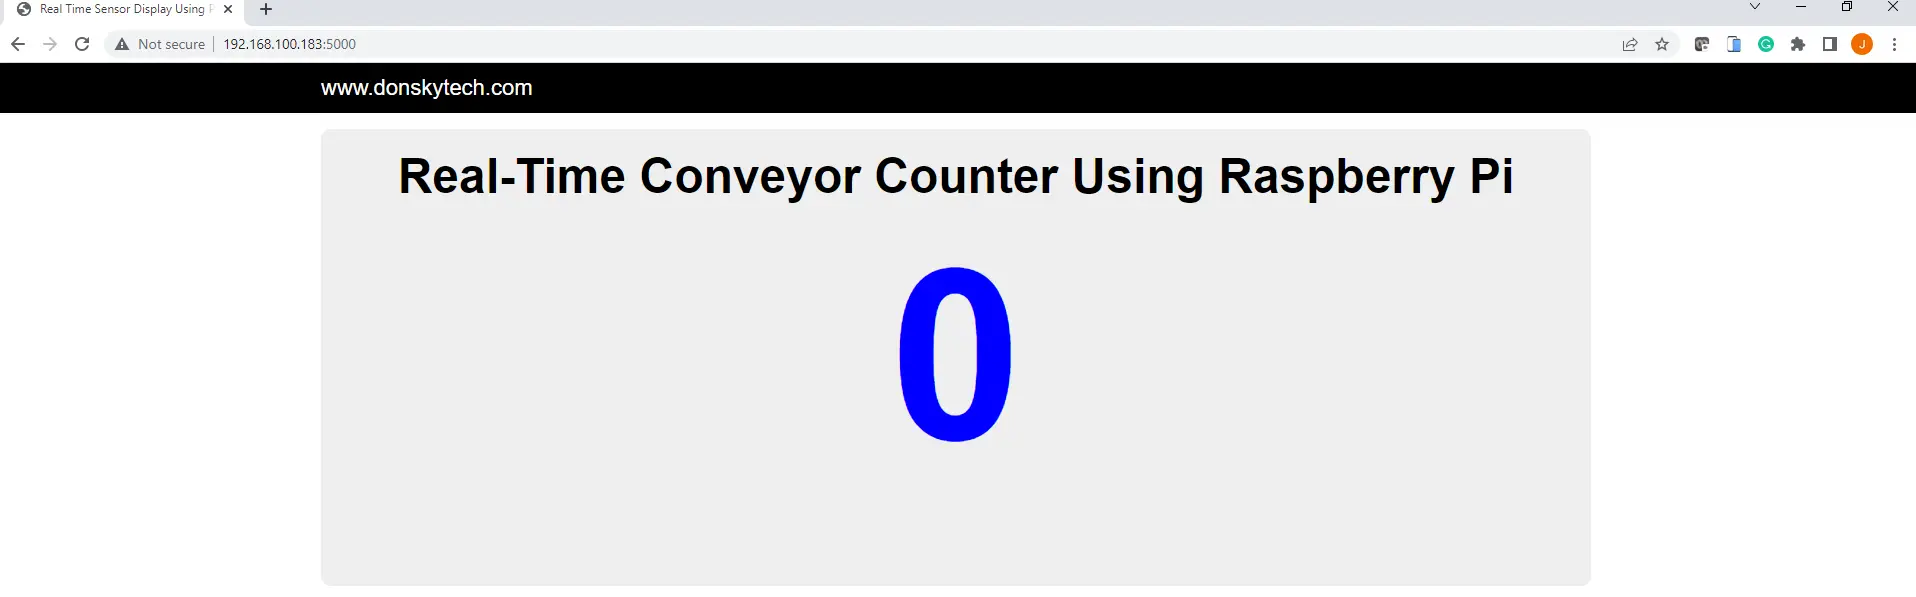 Raspberry Pi Object Counter Web Application